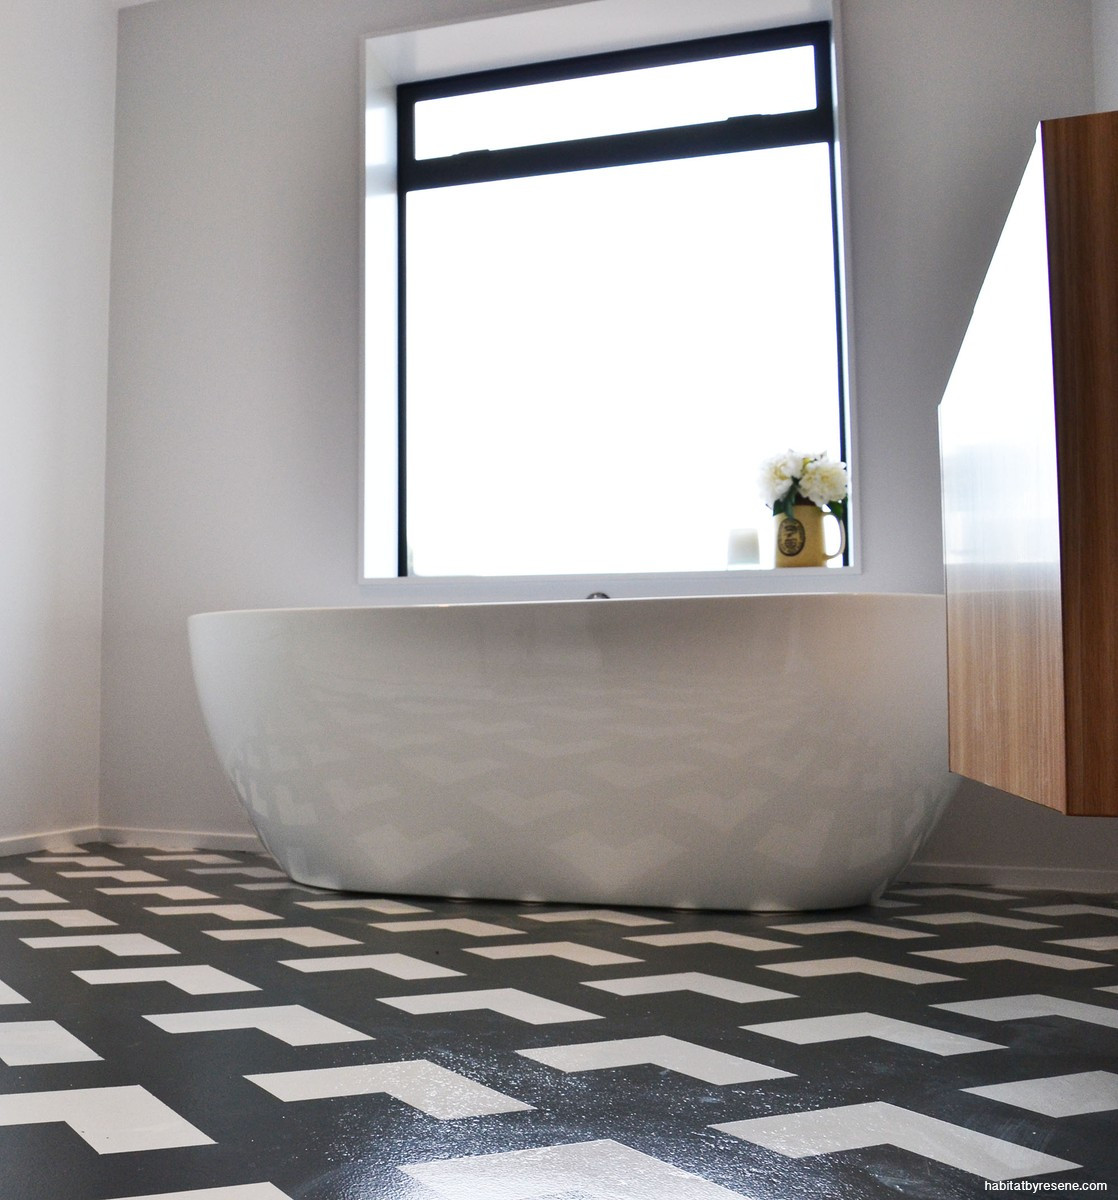 Best ideas about DIY Bathroom Floors
. Save or Pin DIY painted bathroom tiles Now.